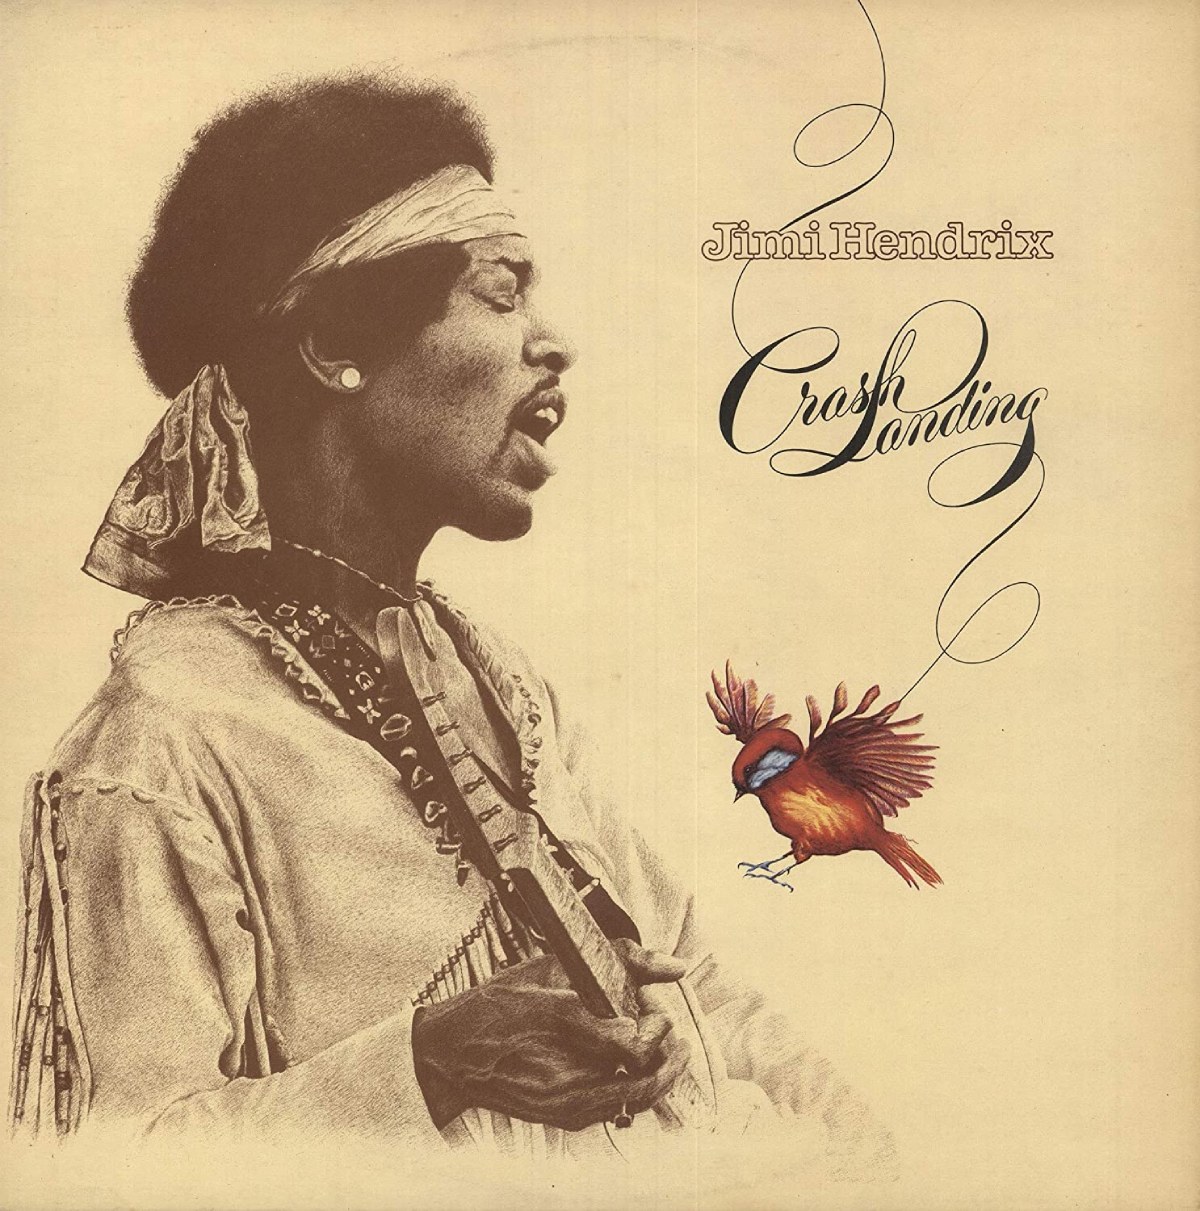 Crash Landing (1975) - Jimi Hendrix (album cover)